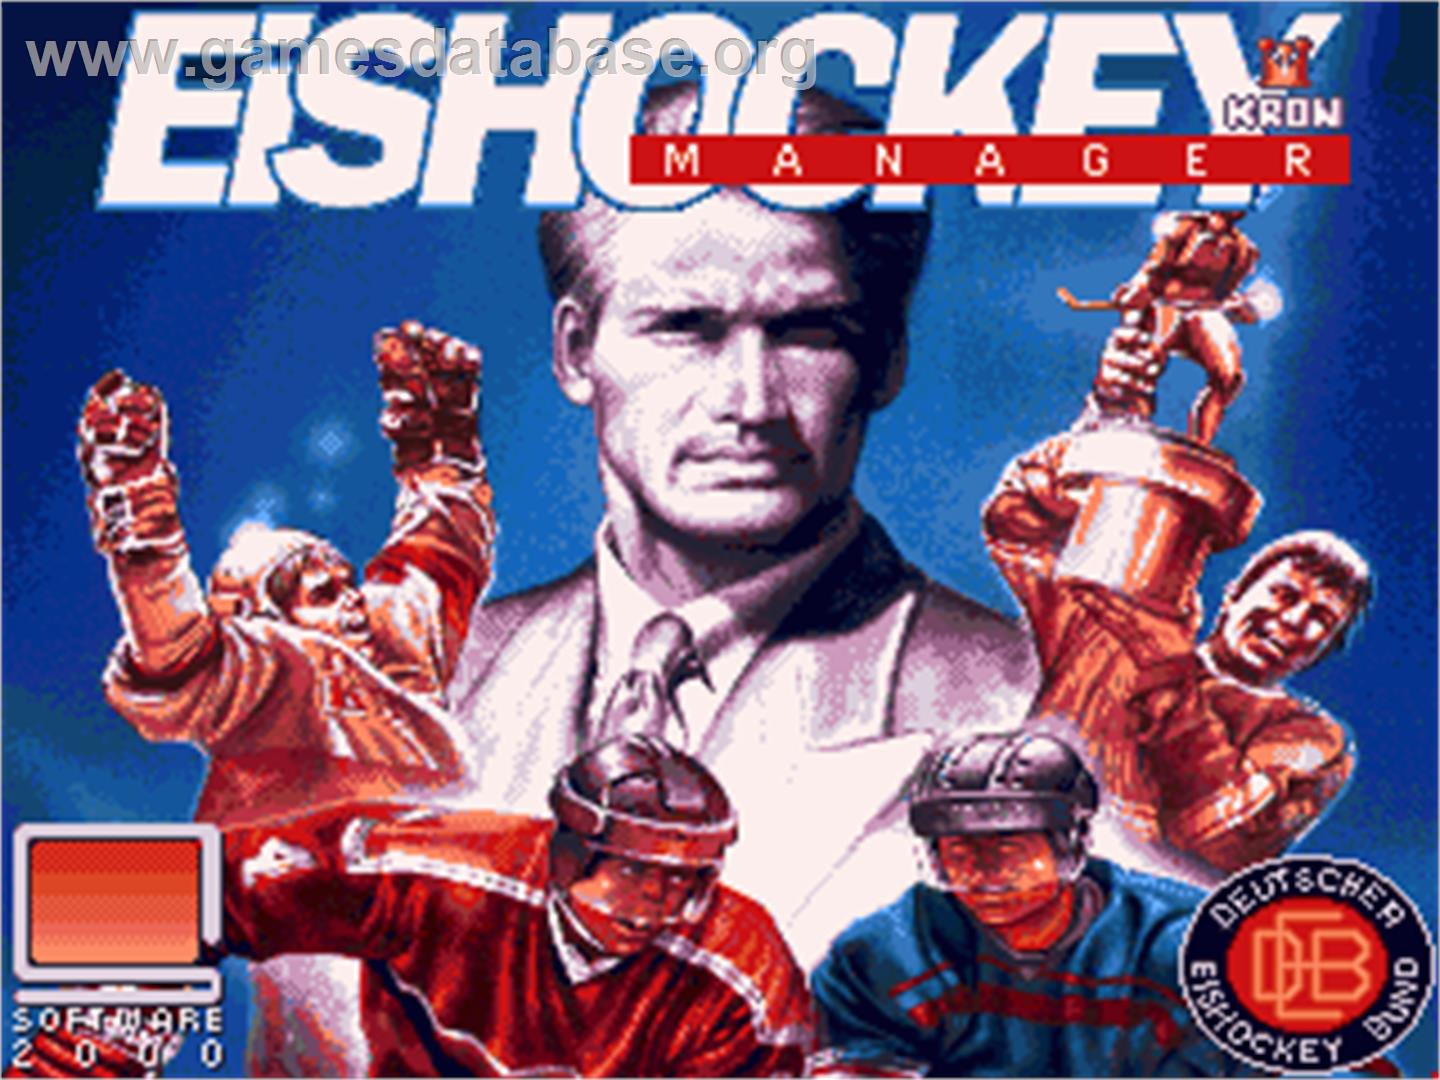 Eishockey Manager - Commodore Amiga - Artwork - Title Screen